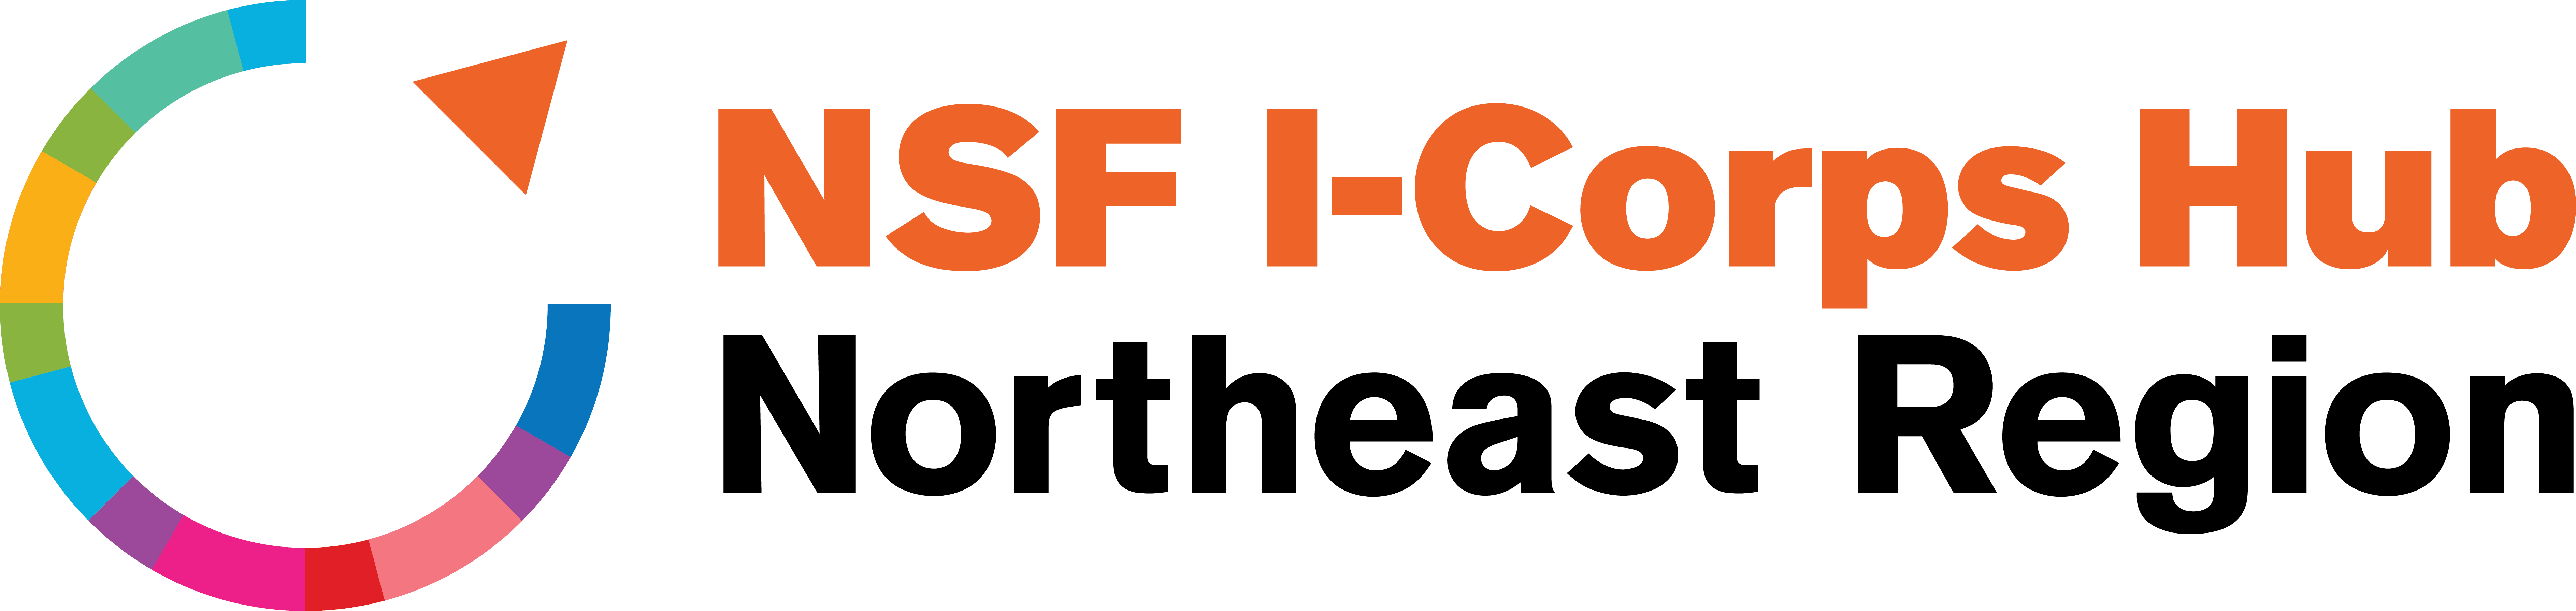 NSF I-Corps Hub Northeast Region logo